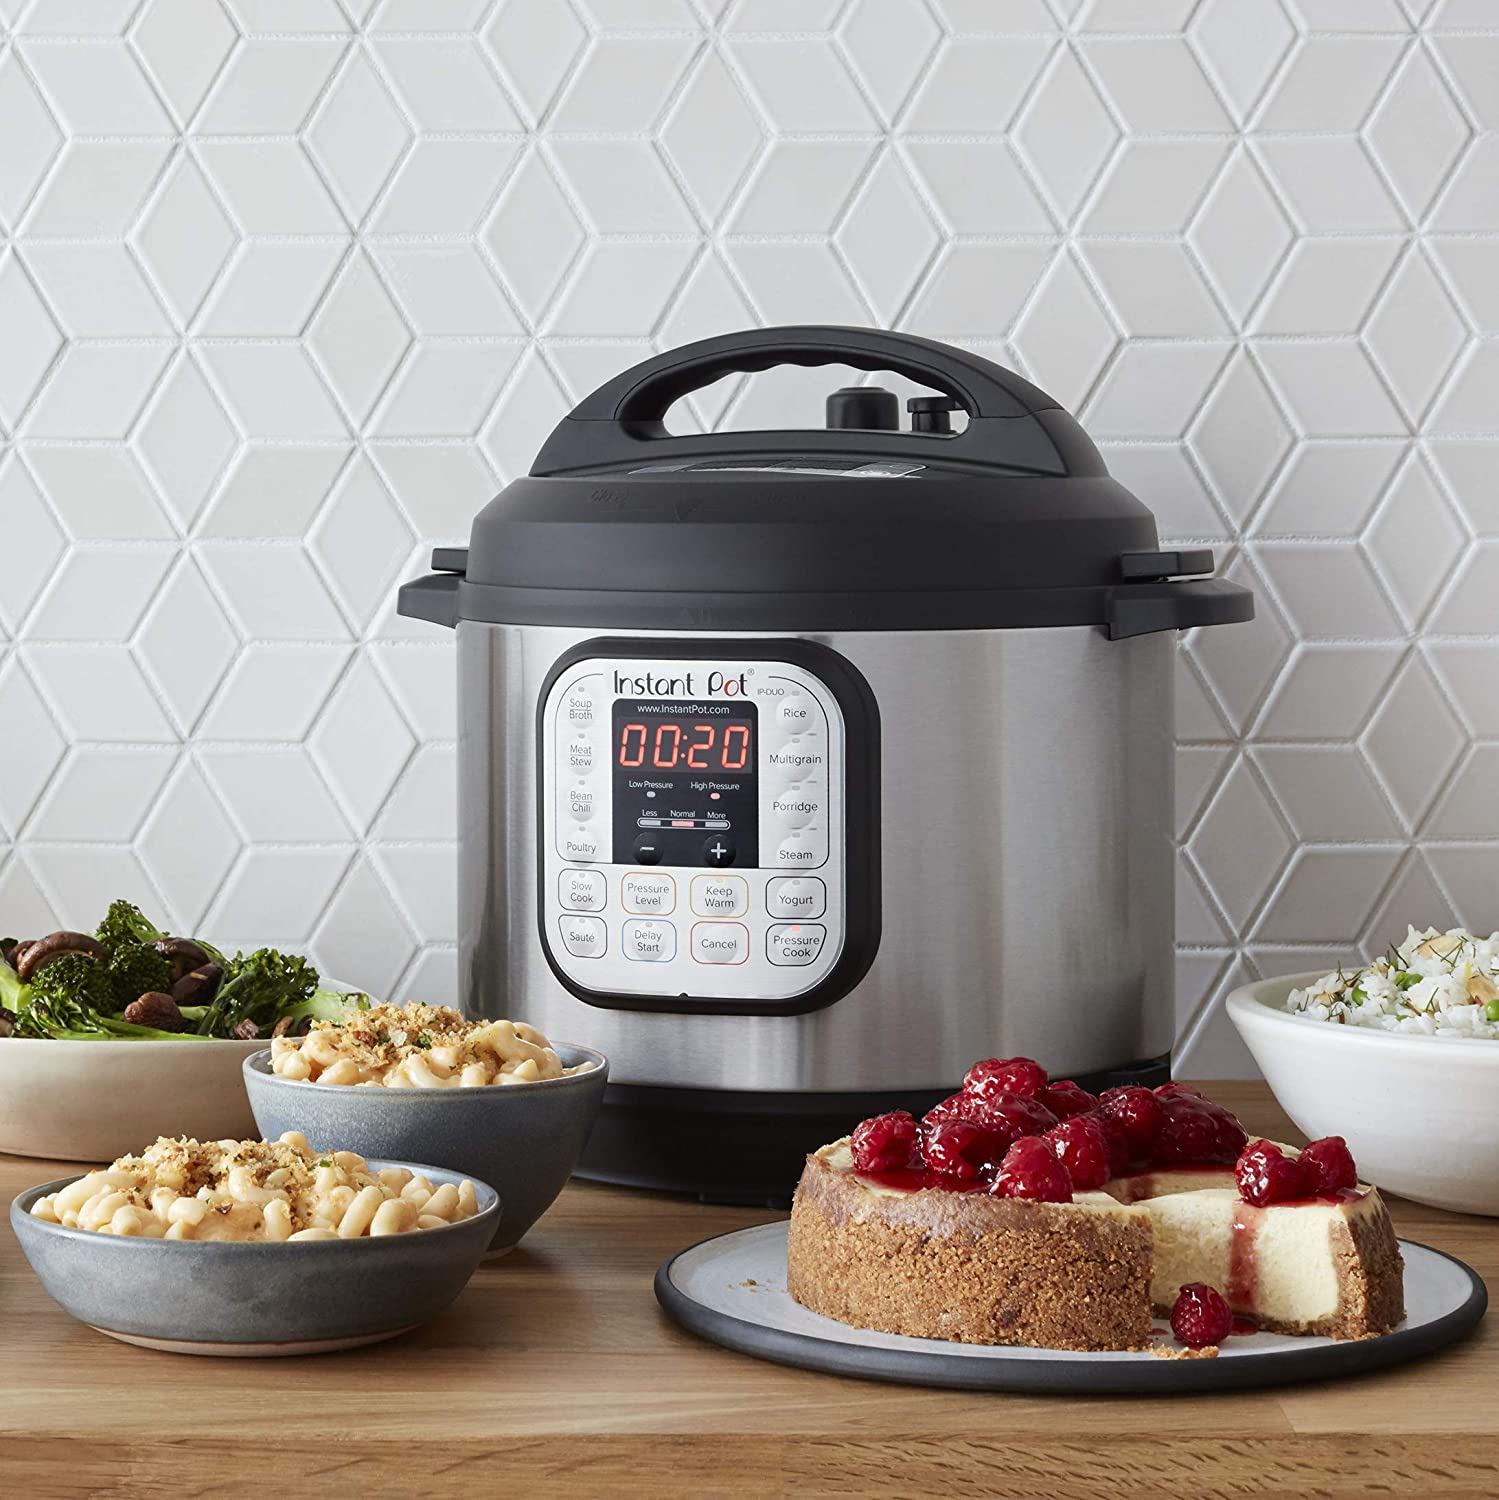 https://www.digitaltrends.com/wp-content/uploads/2020/05/instant-pot-duo-7-in-1-electric-pressure-cooker-1.jpg?fit=720%2C720&p=1